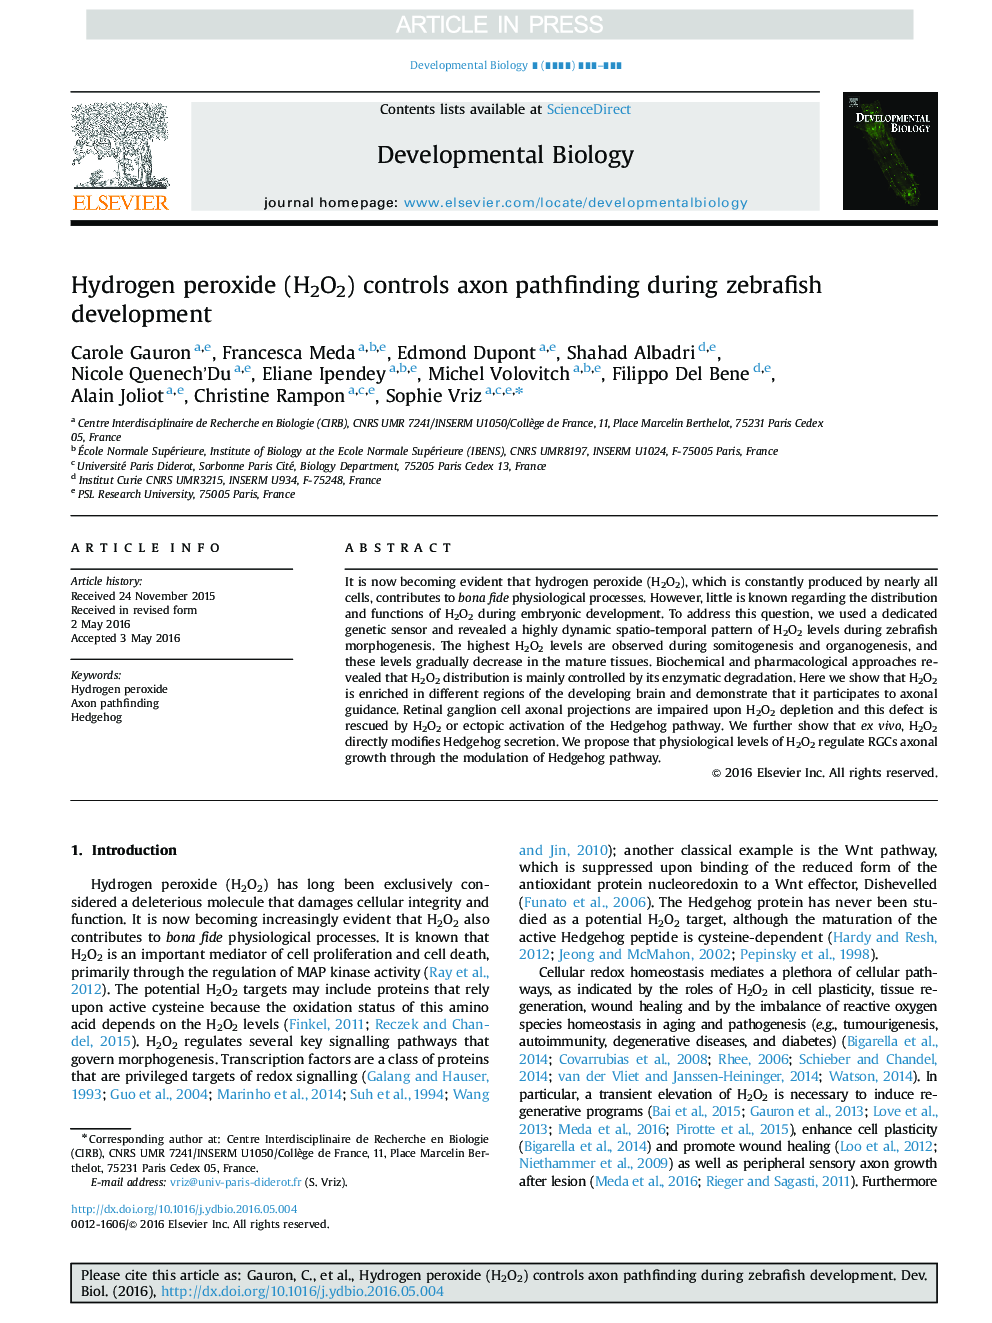 Hydrogen peroxide (H2O2) controls axon pathfinding during zebrafish development